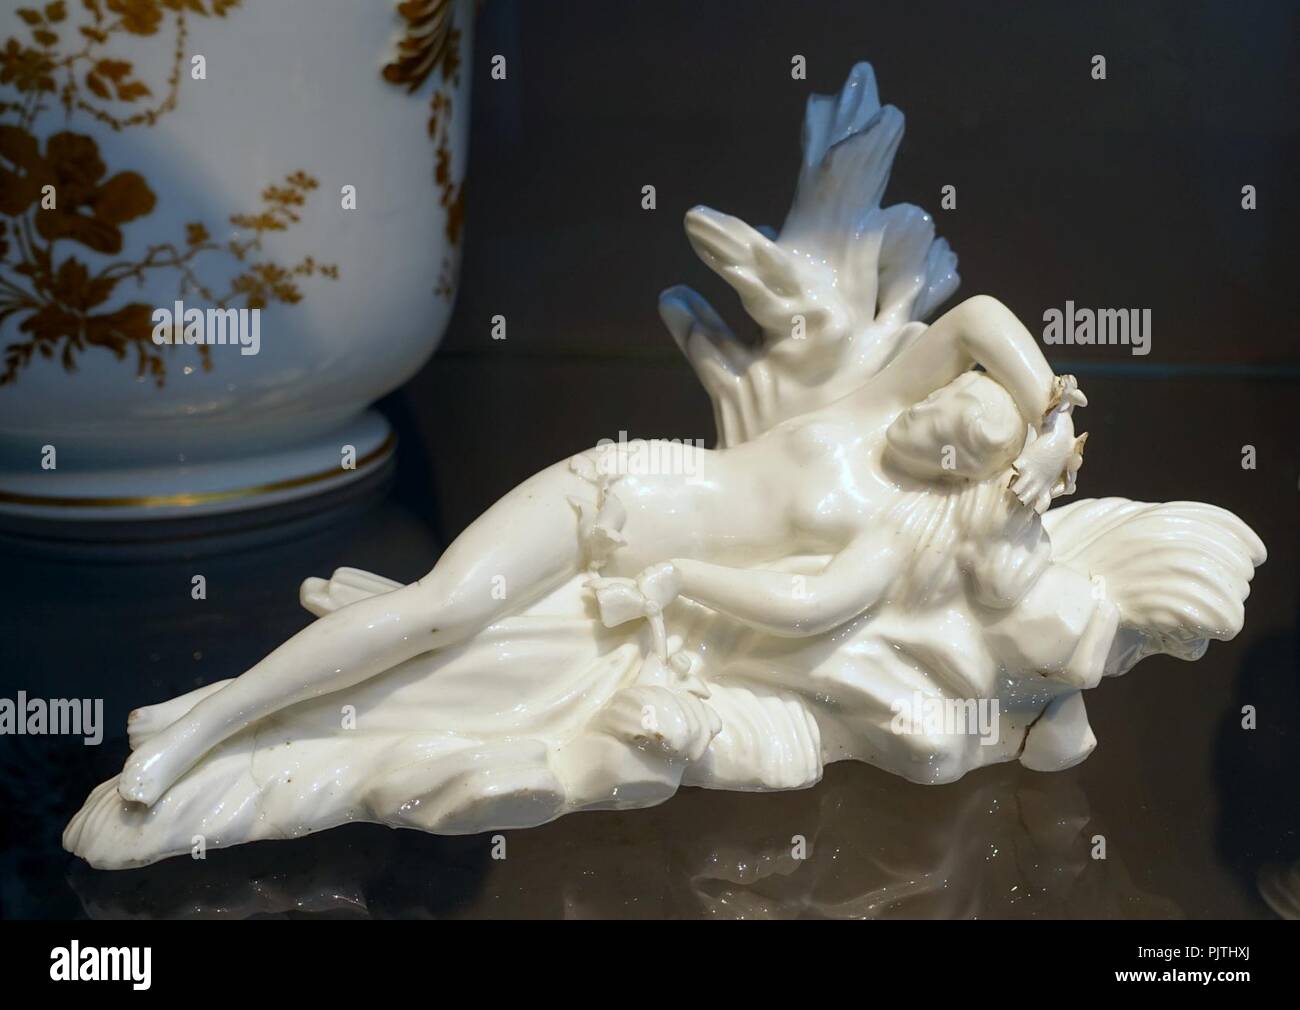 Bather and Sleeping woman, 1 of 2, Vincennes Porcelain Factory, c. 1747-1752, soft-paste porcelain - Wadsworth Atheneum - Hartford, CT - Stock Photo